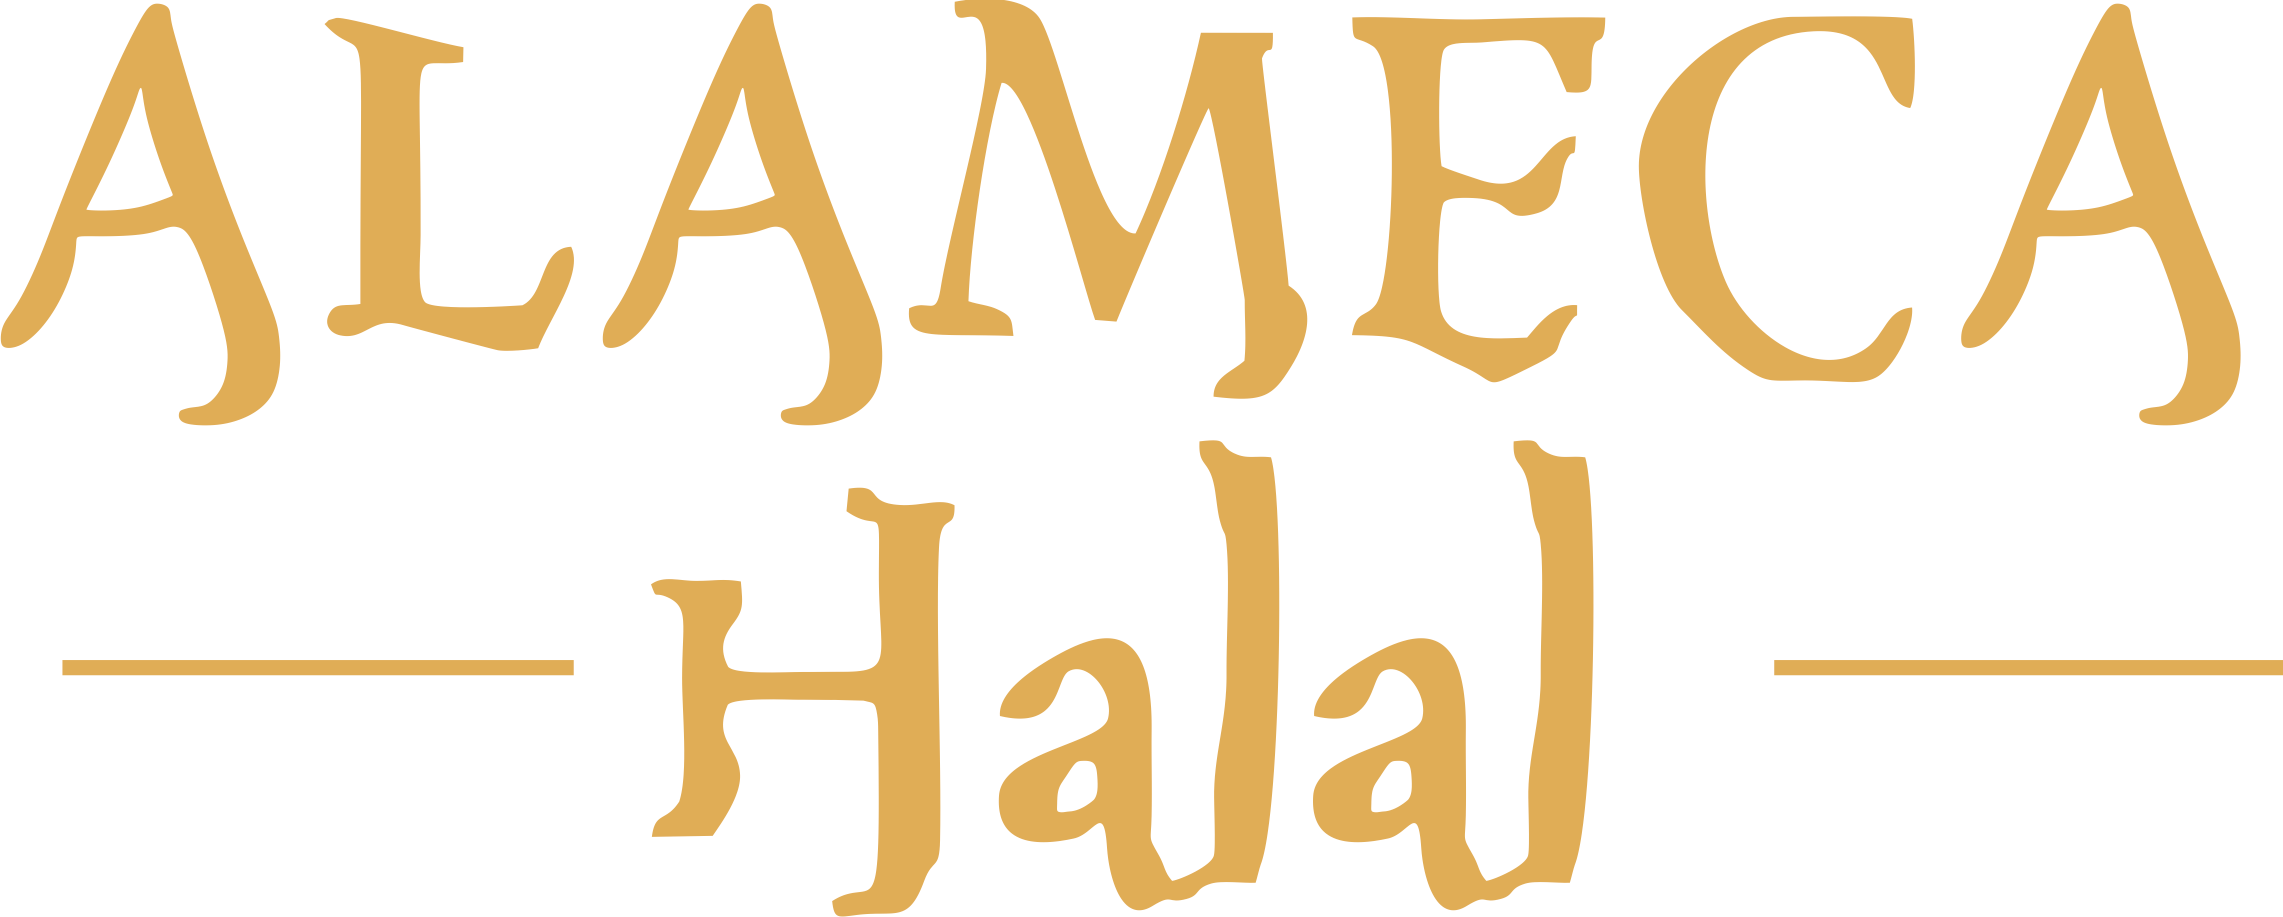 Alameca-Halal-Habana